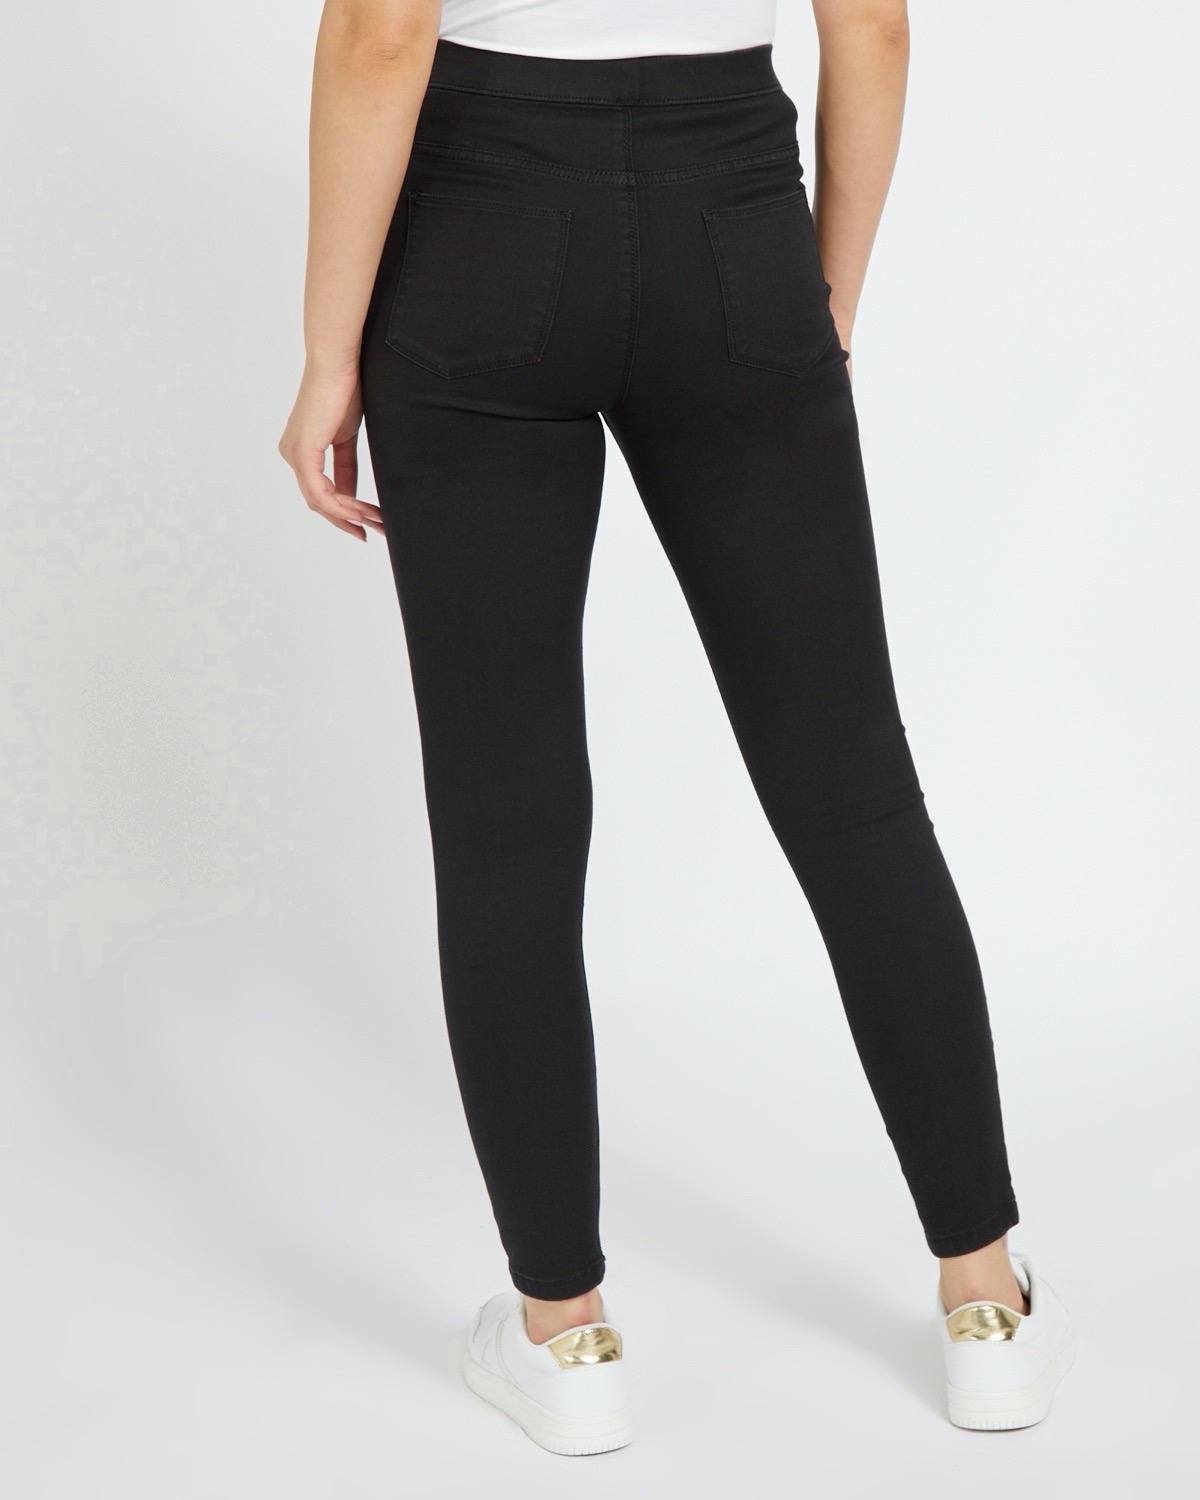 Buy Women's Black High Waisted Jeggings Jeans Online